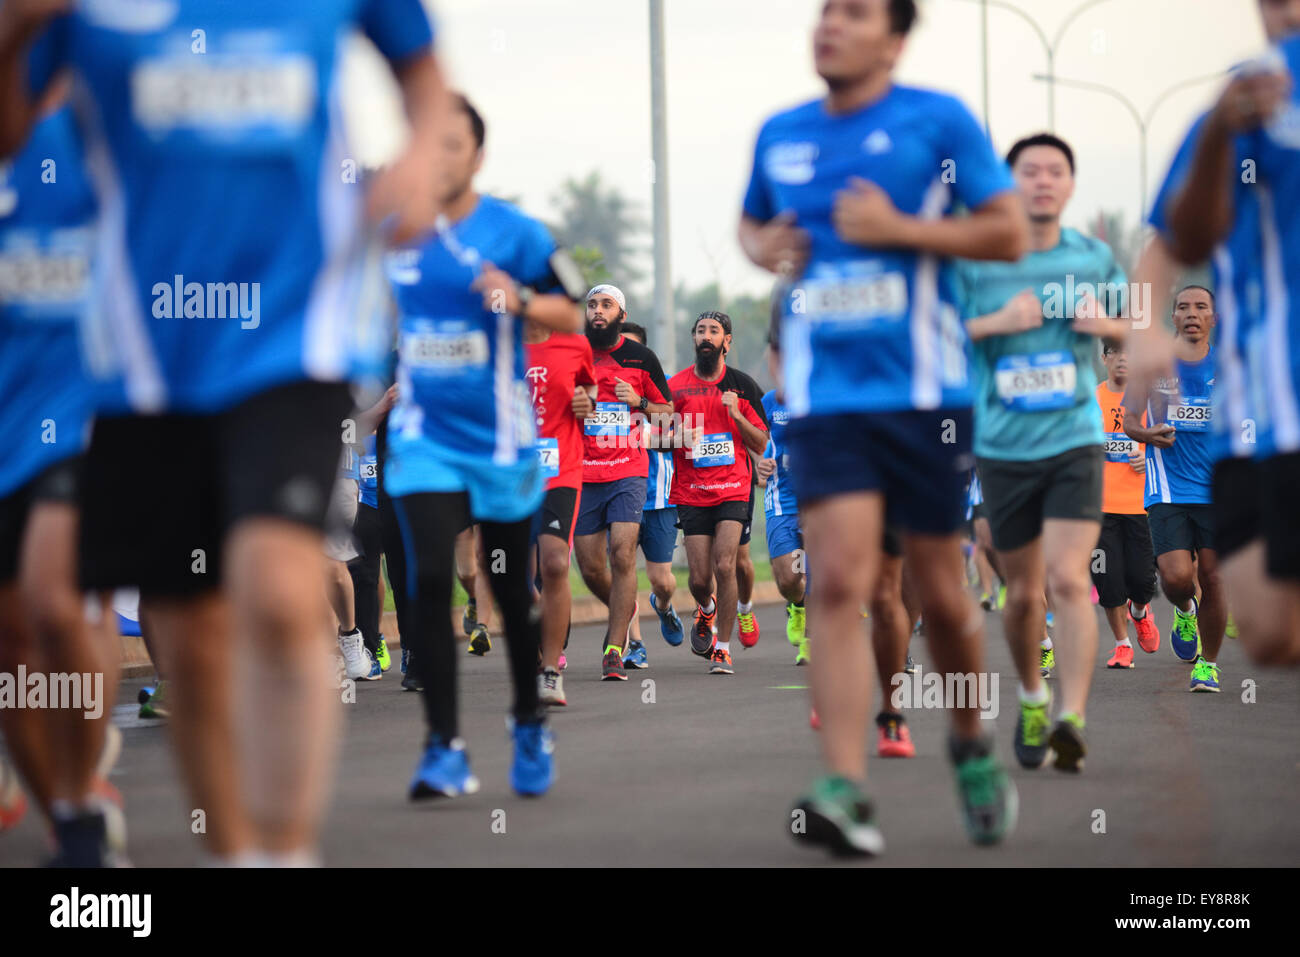 Teilnehmer beim „Pocari Sweat Run Indonesia 2015“ in Tangerang, Banten, Indonesien. Stockfoto